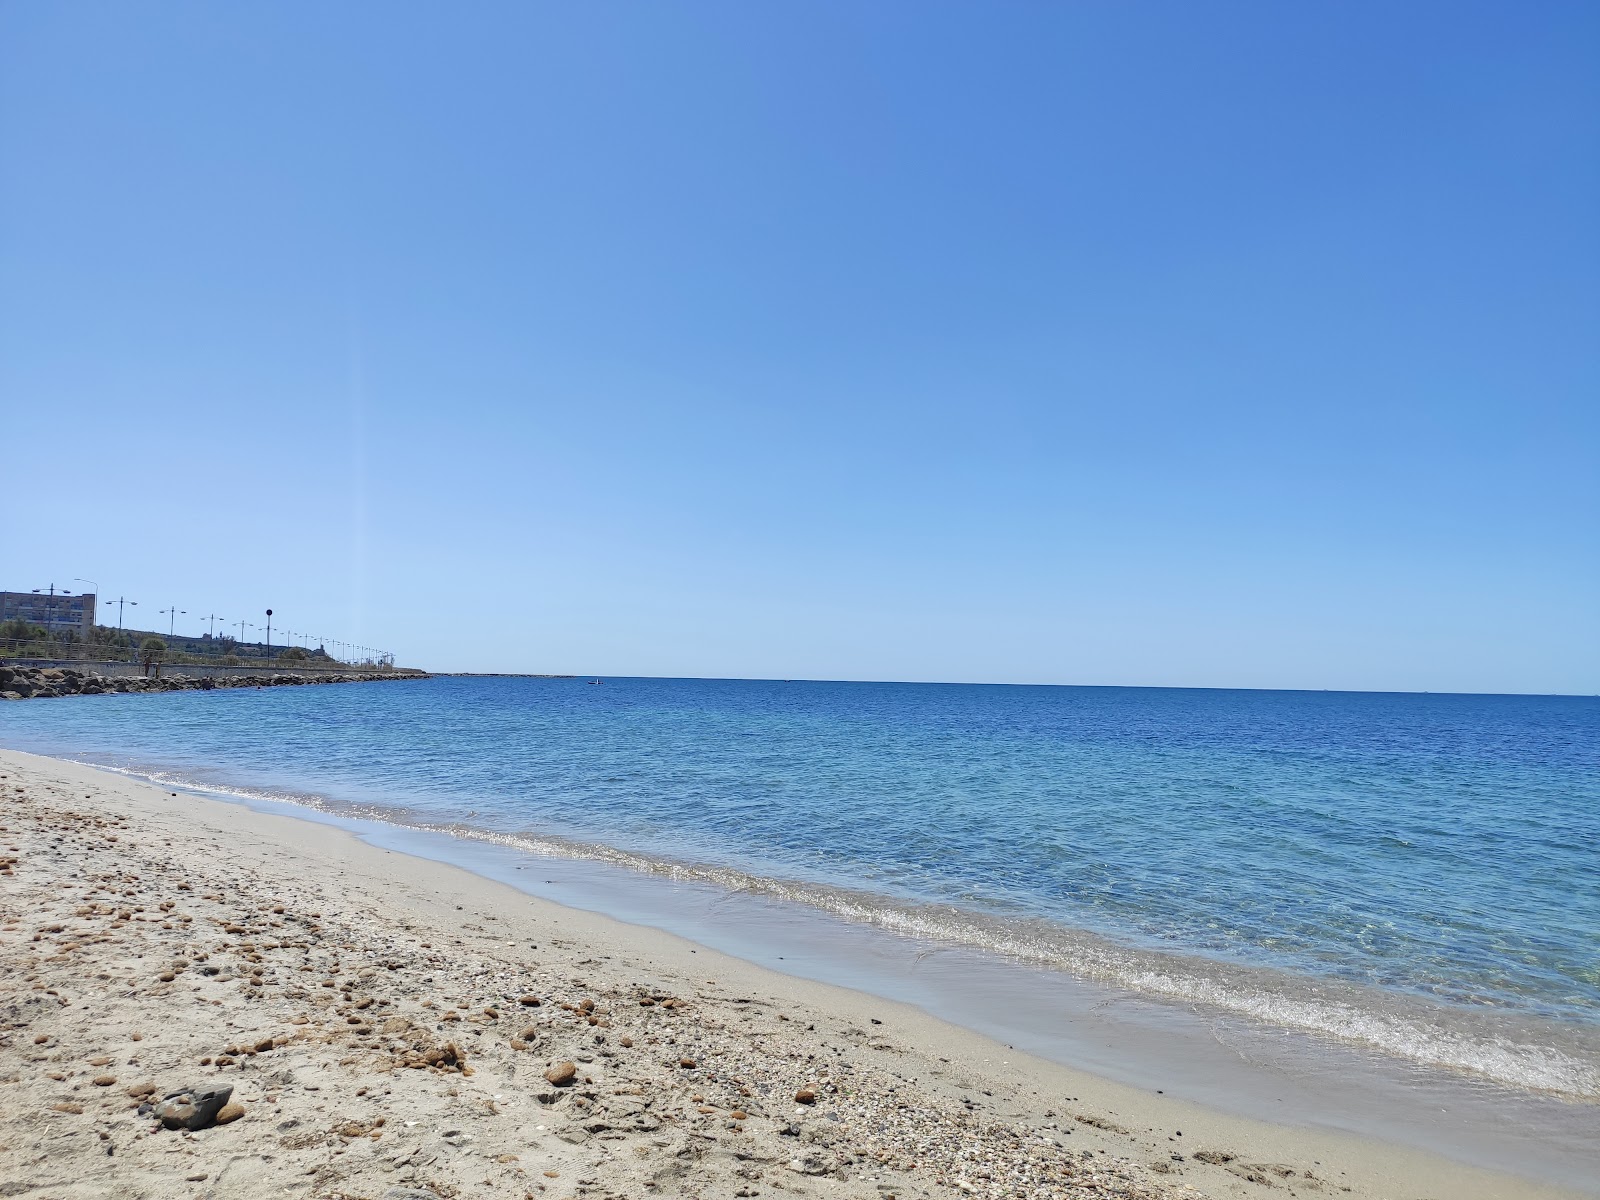 Spiaggia della Diga'in fotoğrafı mavi saf su yüzey ile